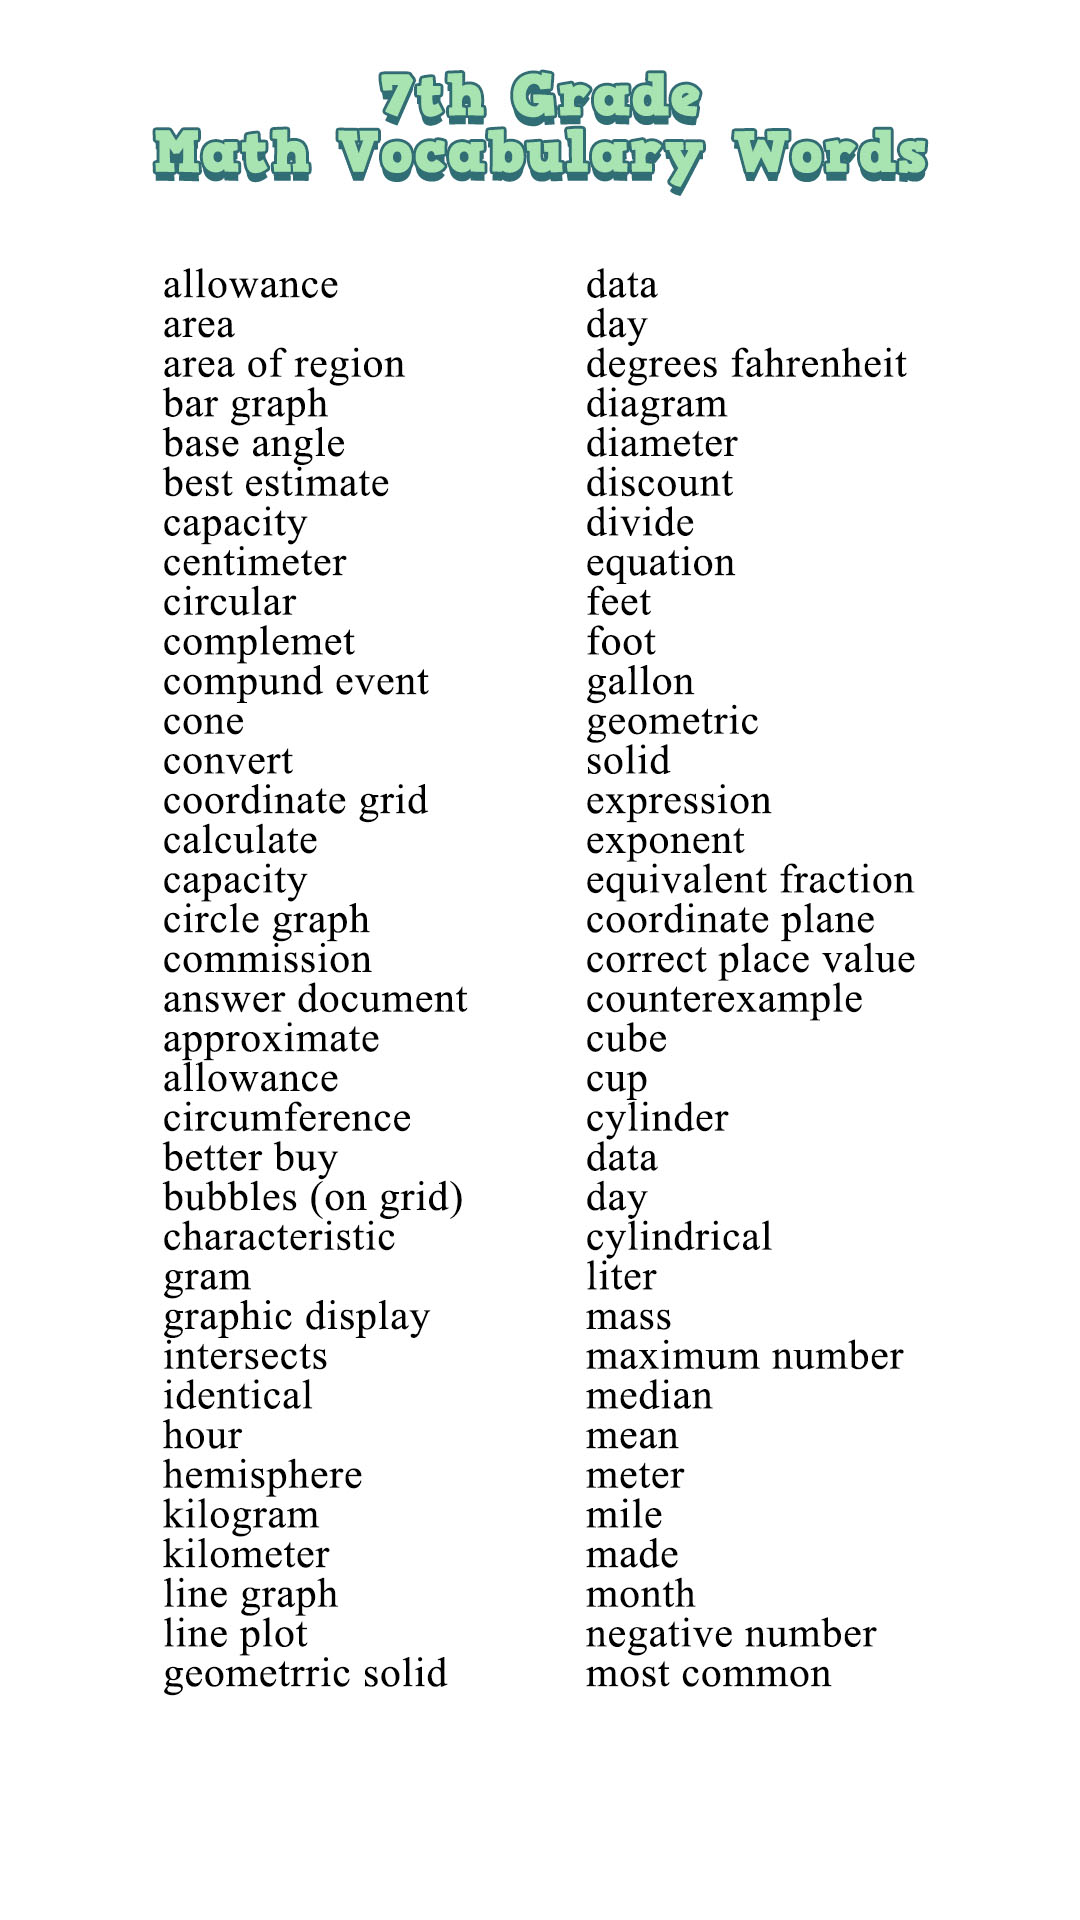 7th Grade Math Vocabulary Words Image